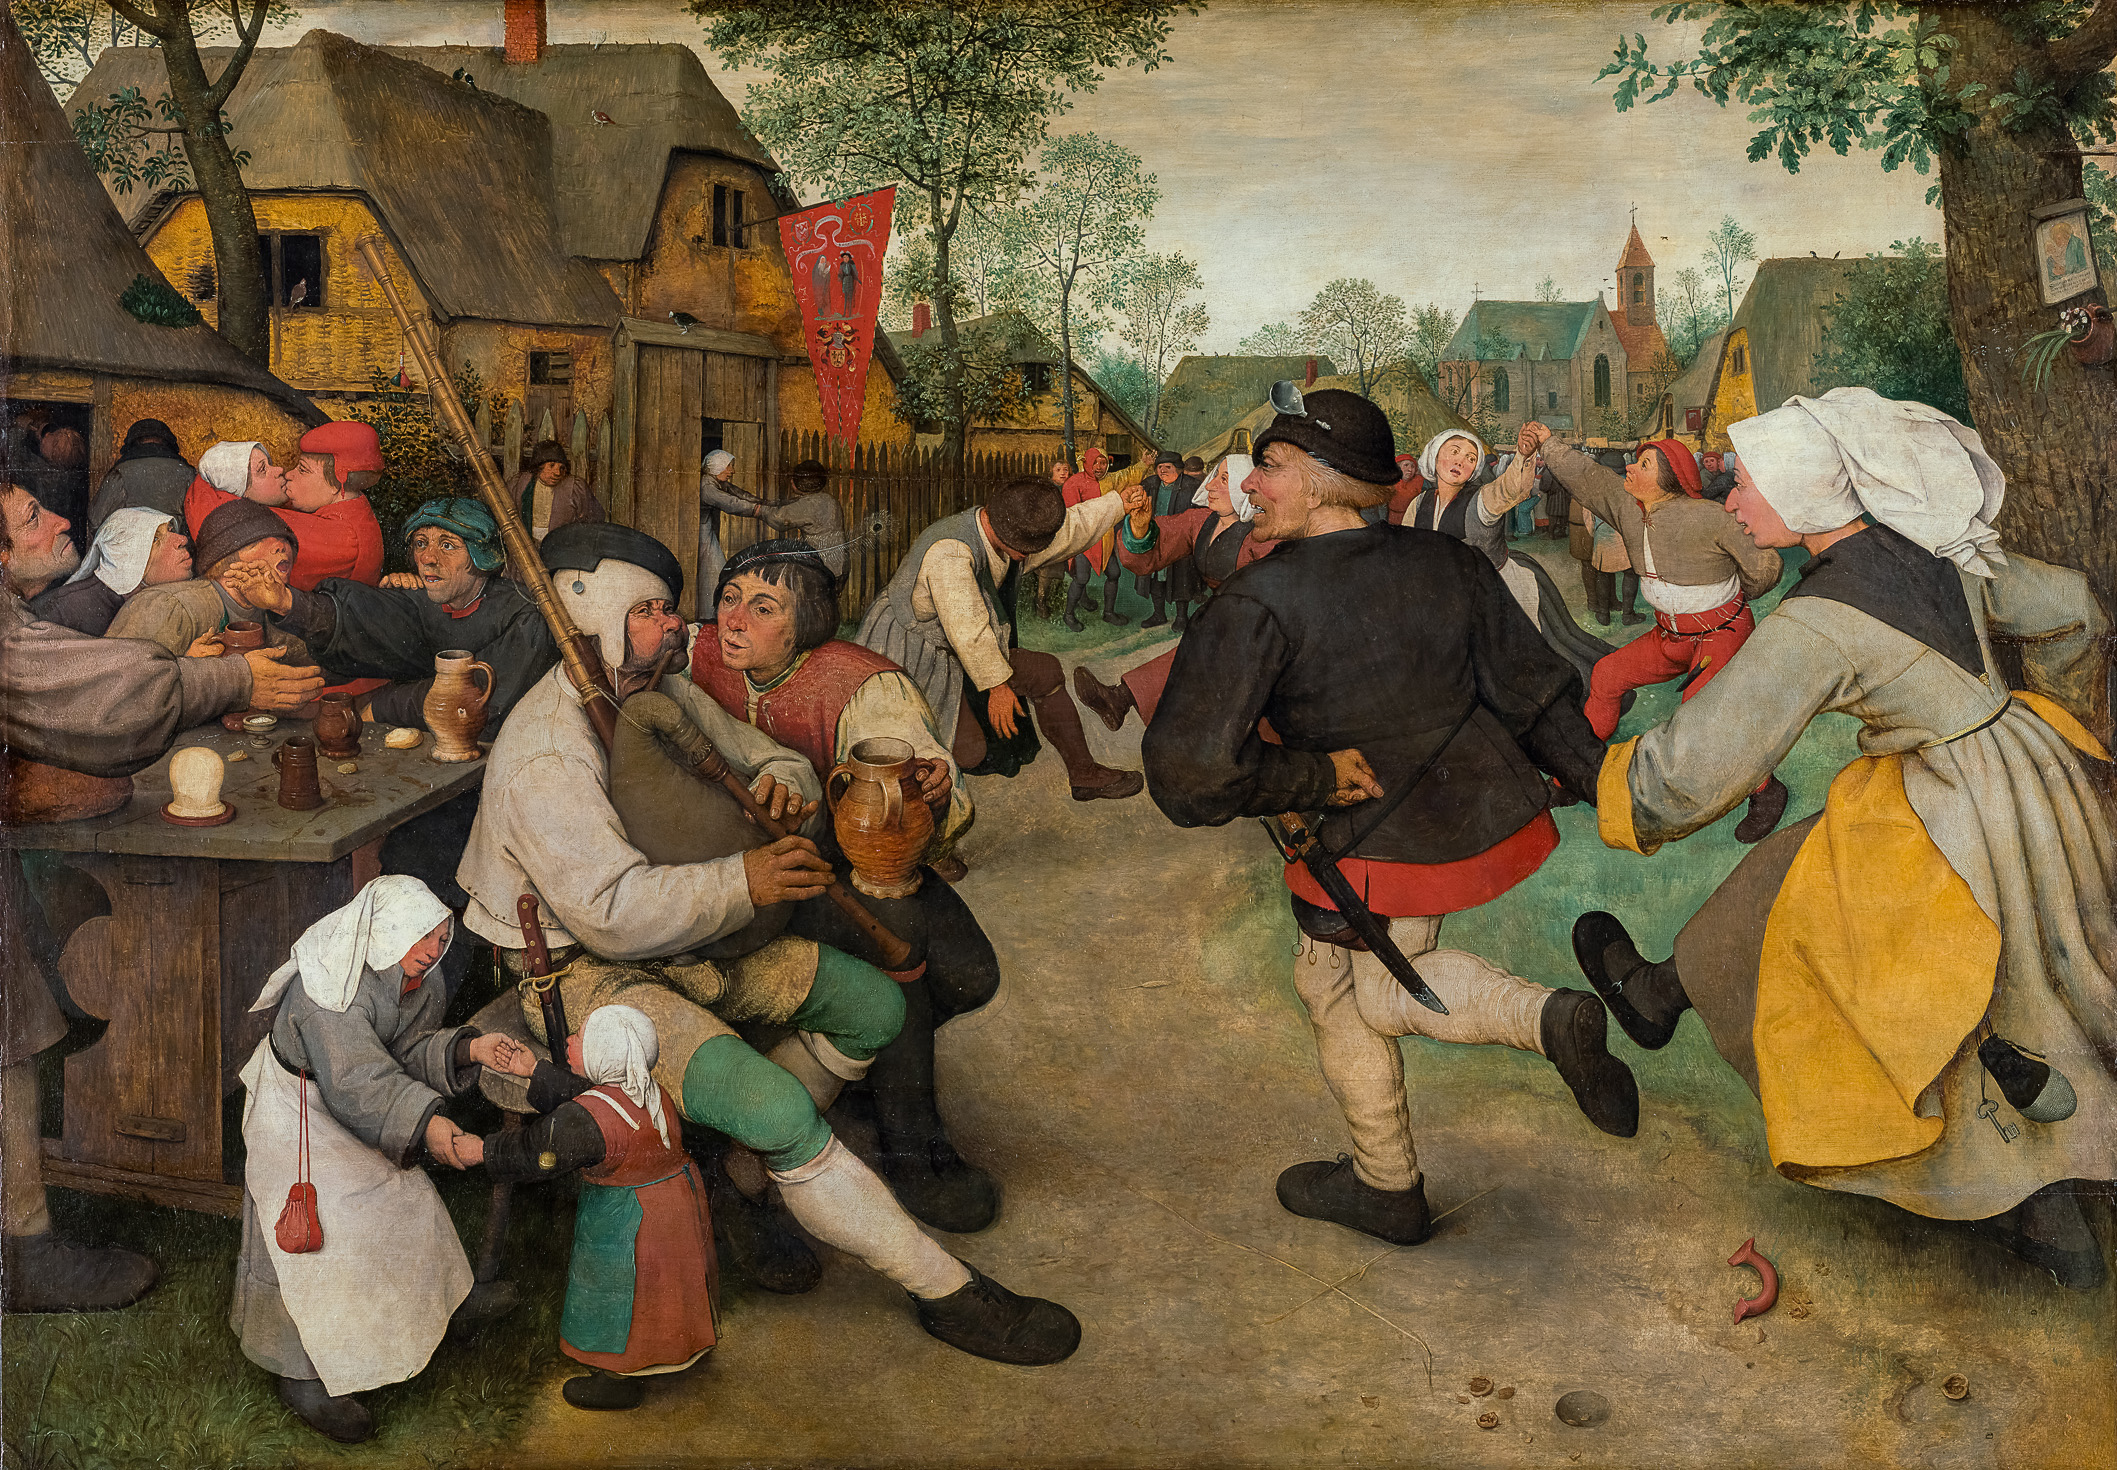 Peasant Dance by Pieter Bruegel the Elder - c. 1568 - 114 cm × 164 cm Kunsthistorisches Museum